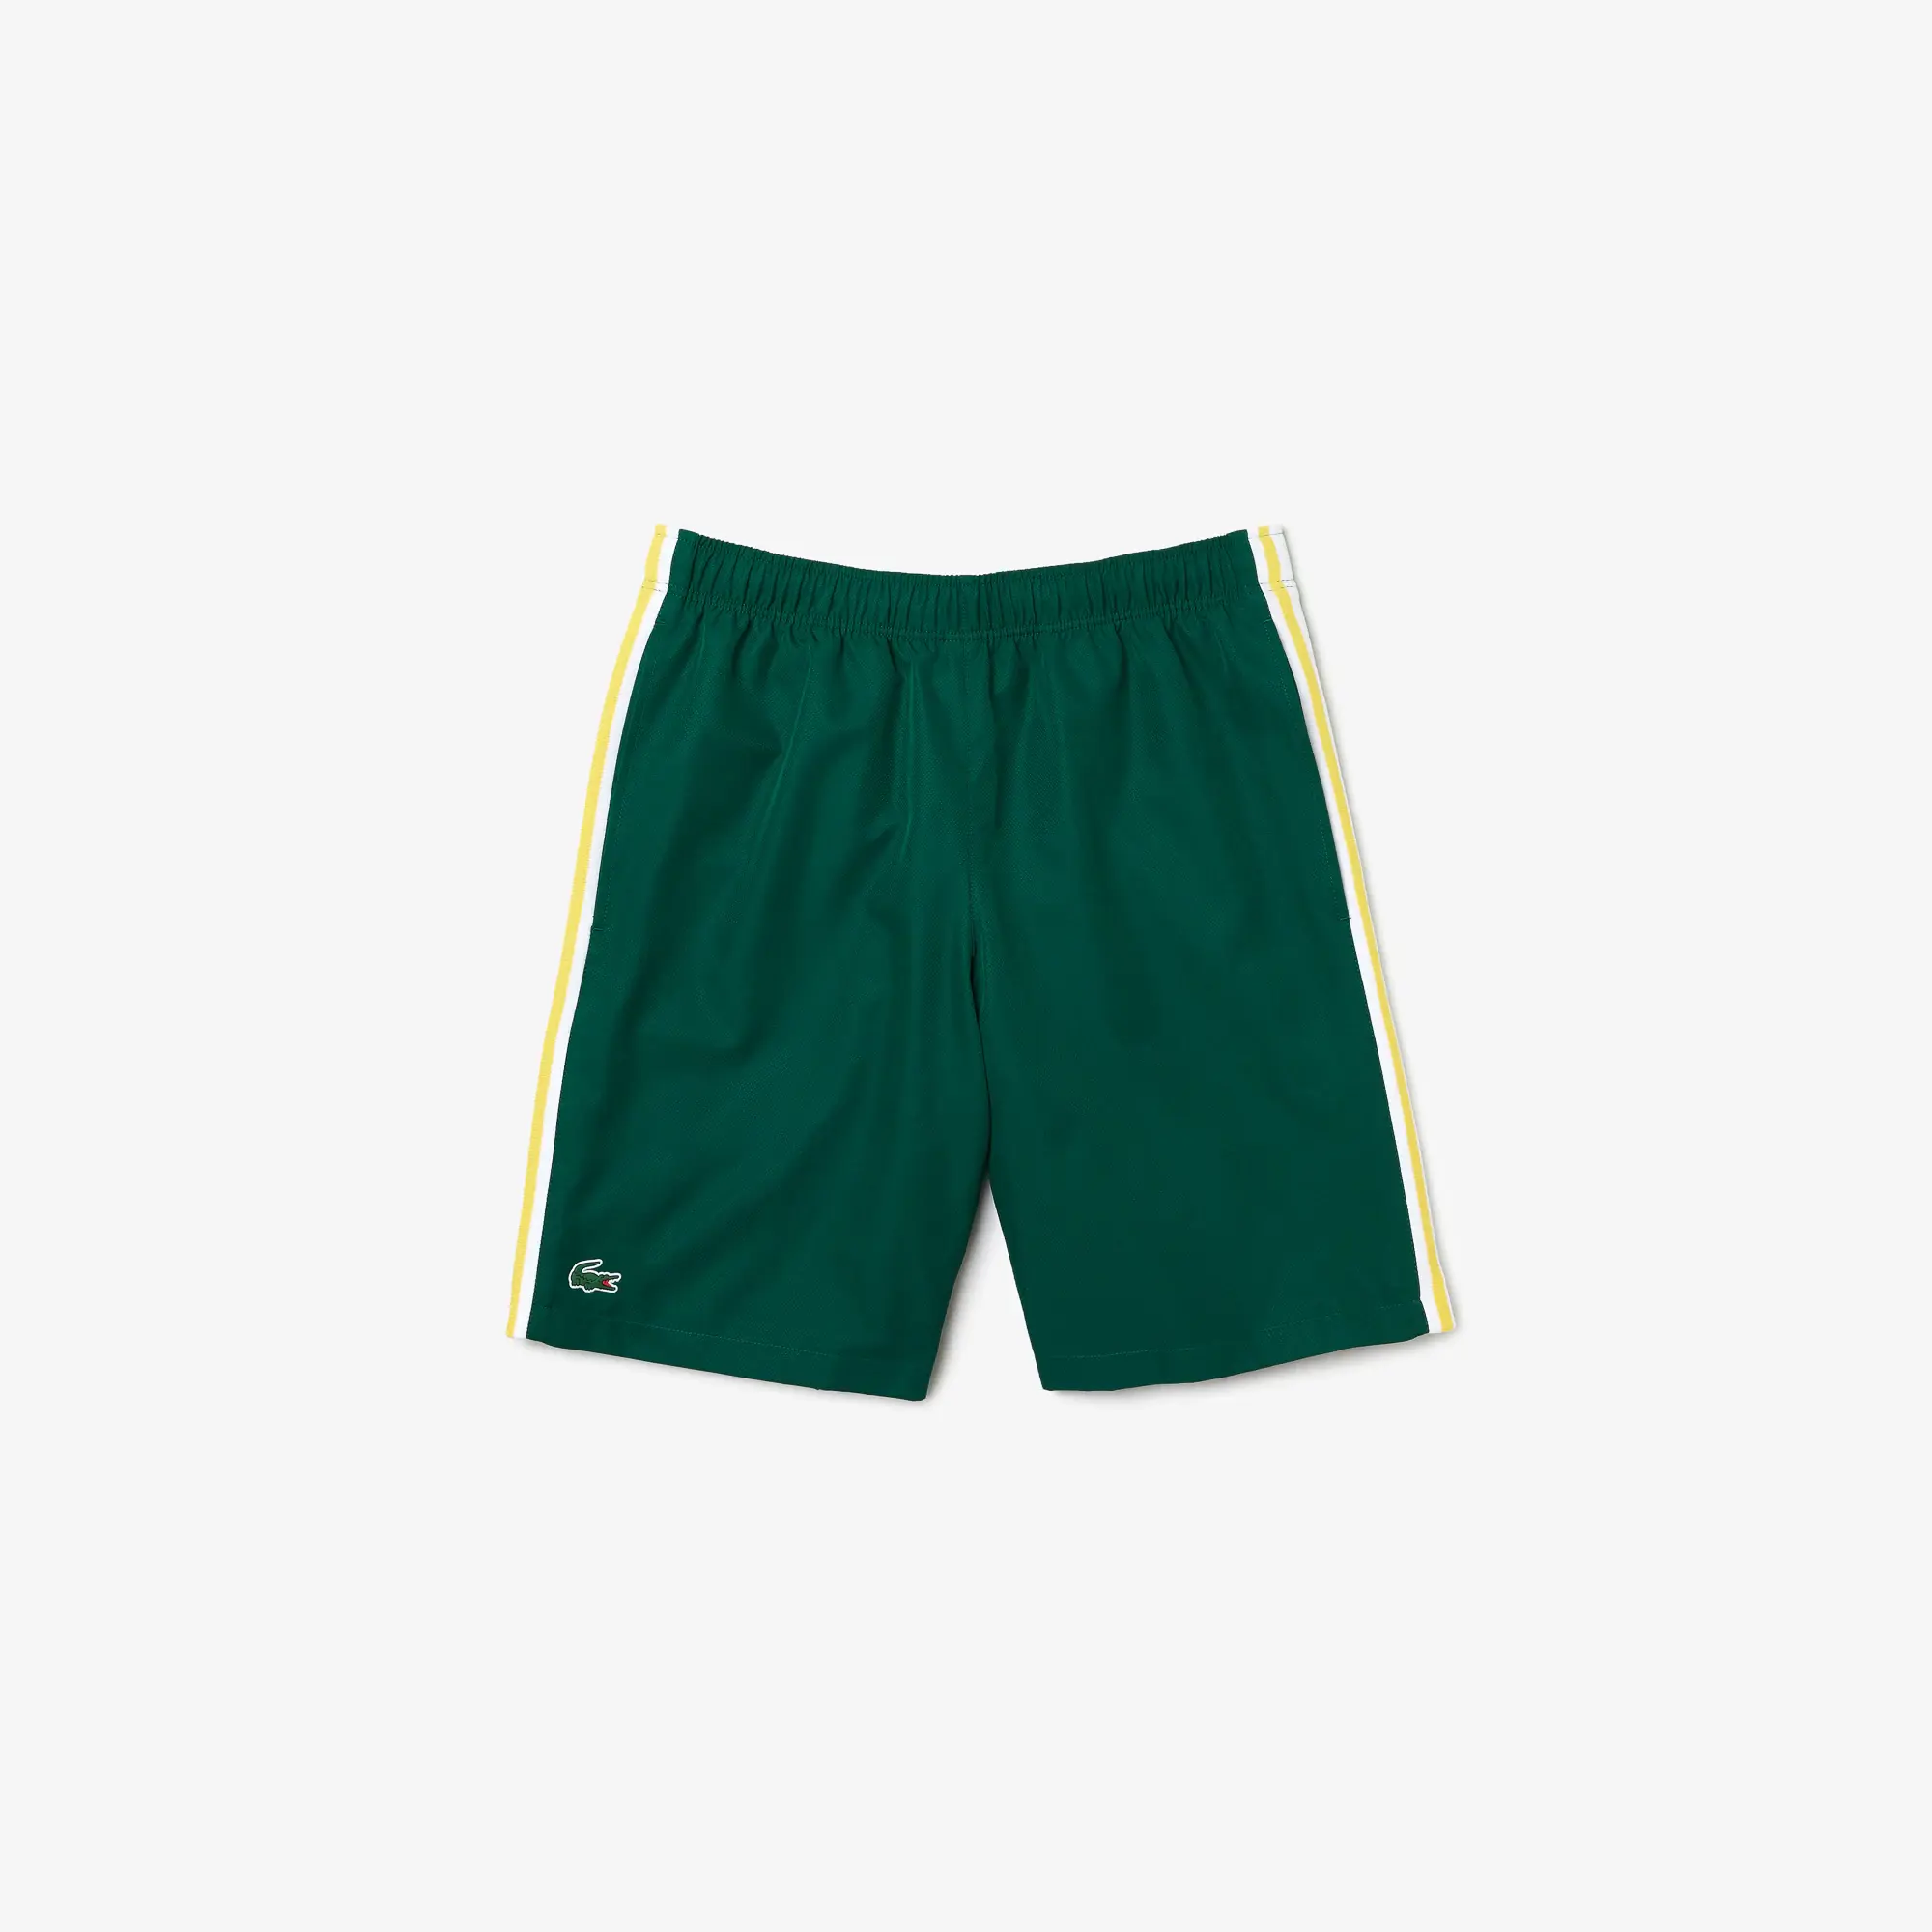 Lacoste Men’s SPORT Contrast Bands Lightweight Shorts. 2